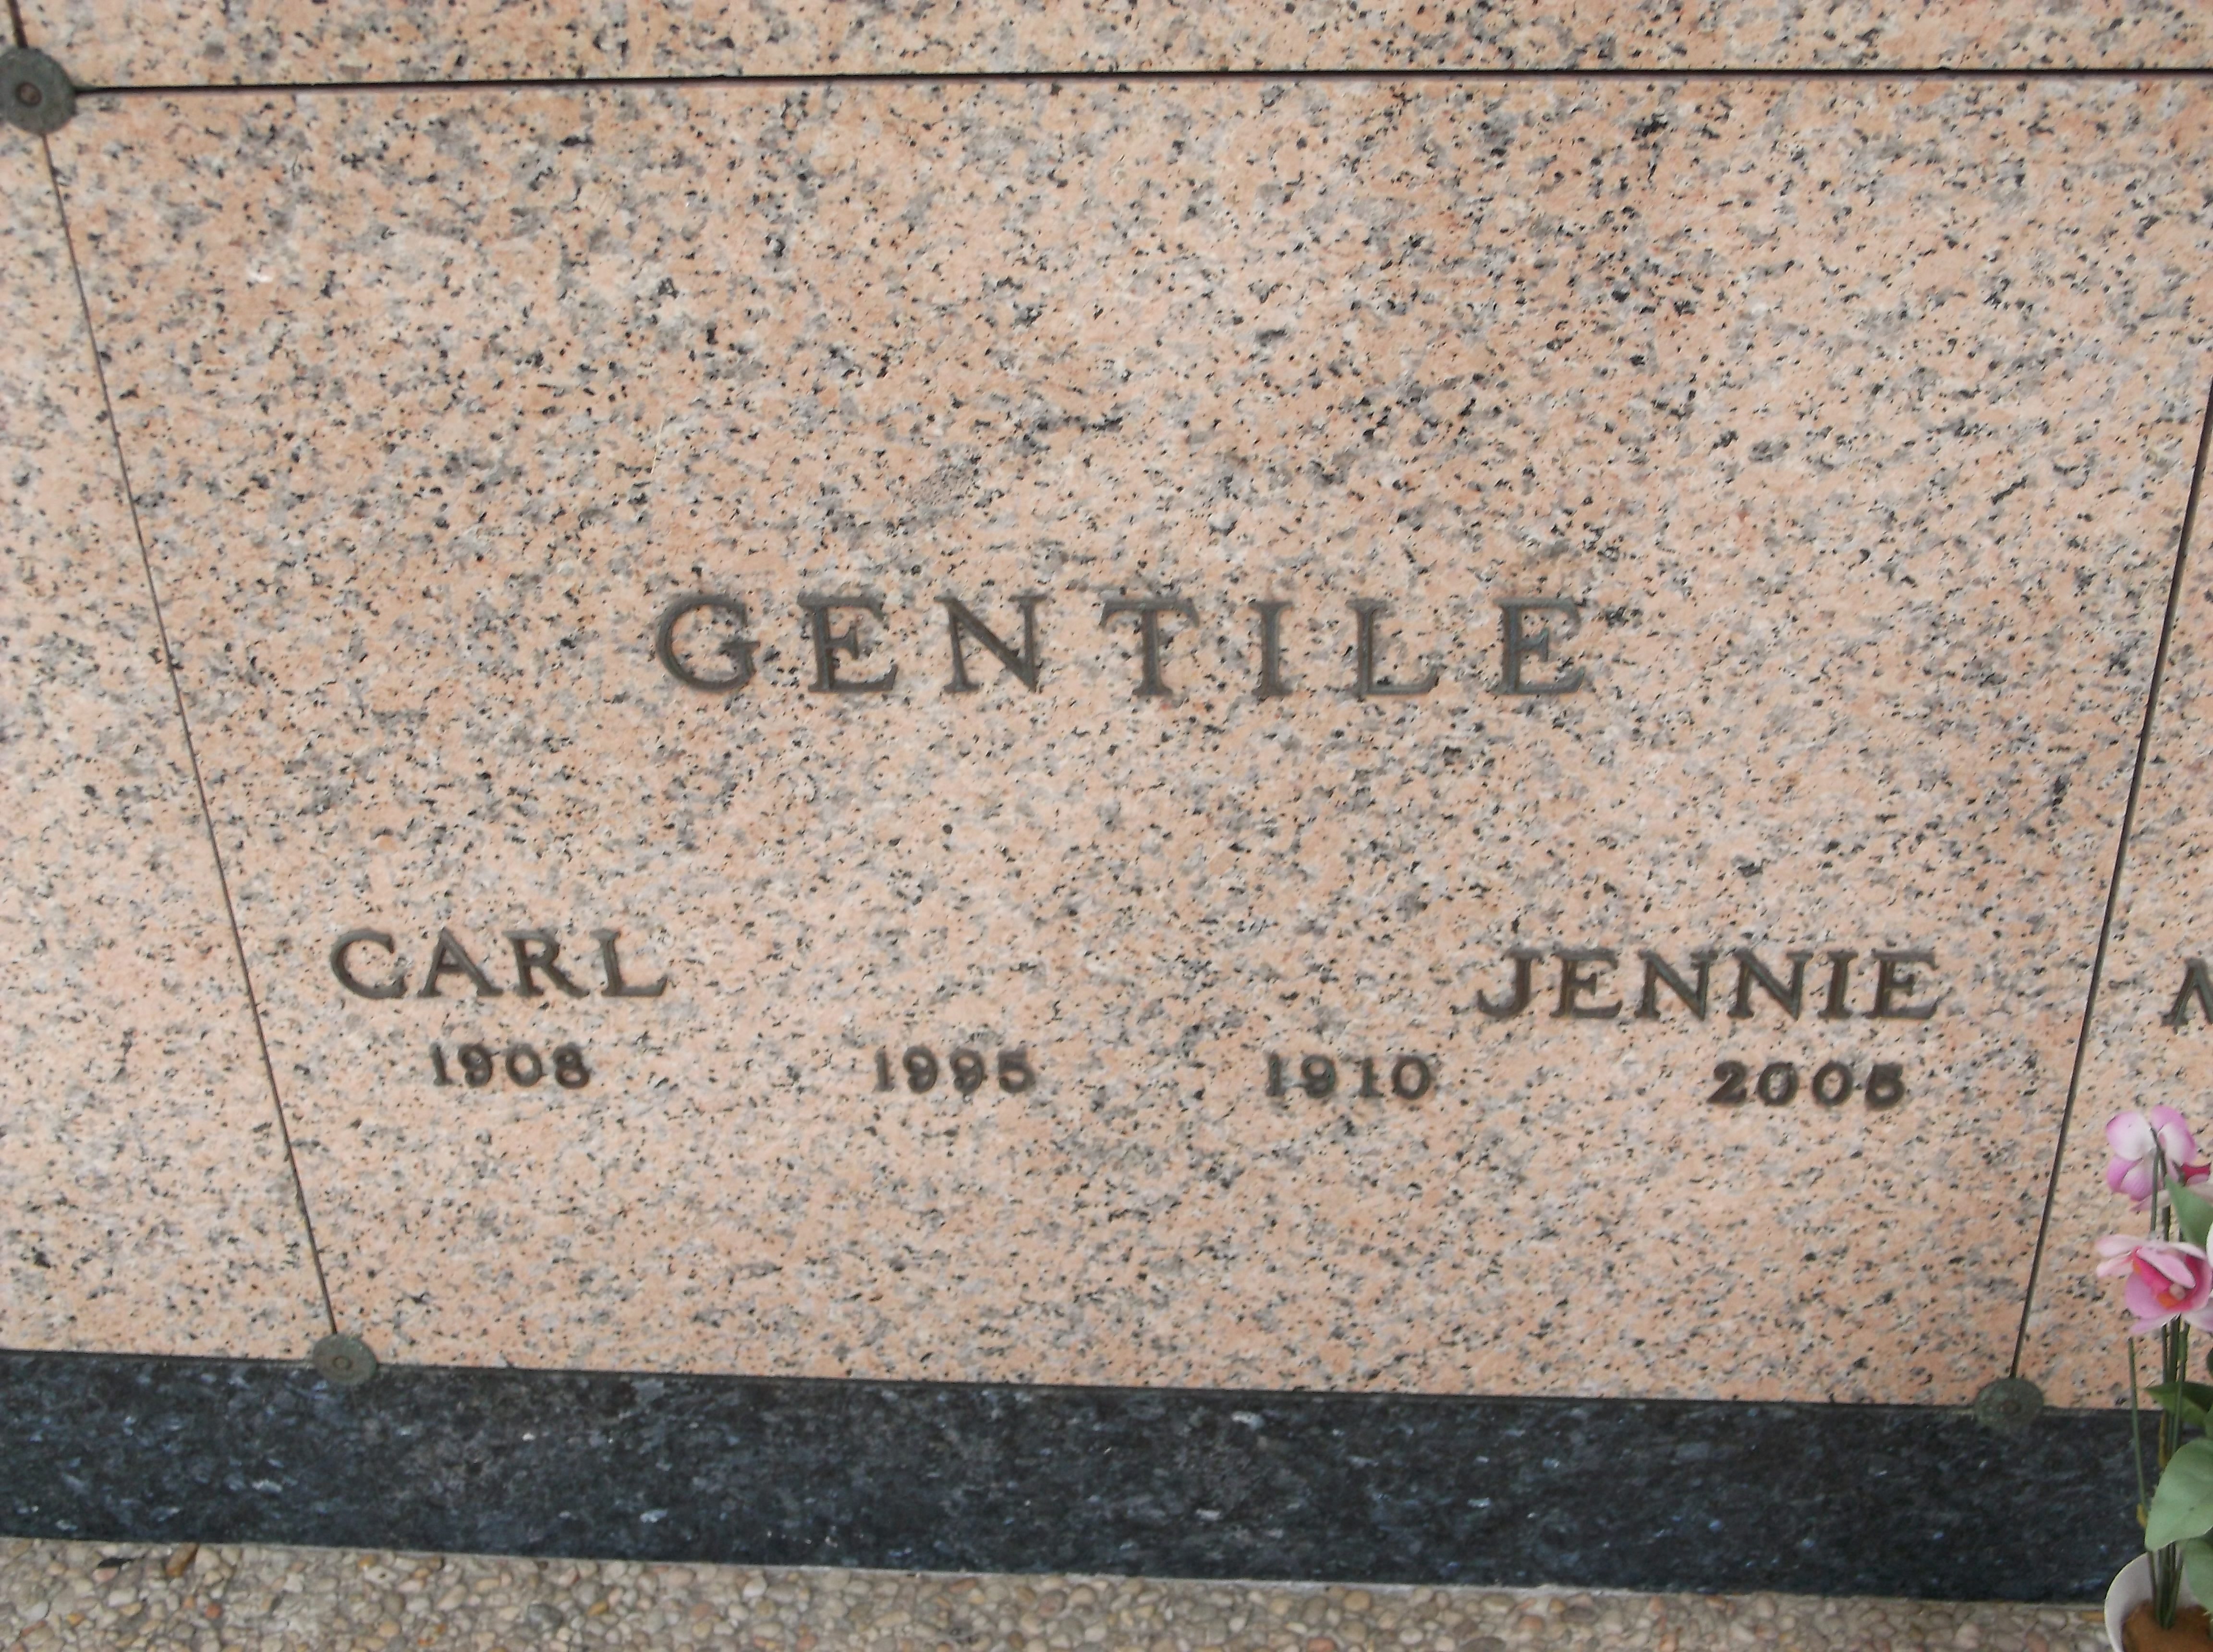 Jennie Gentile